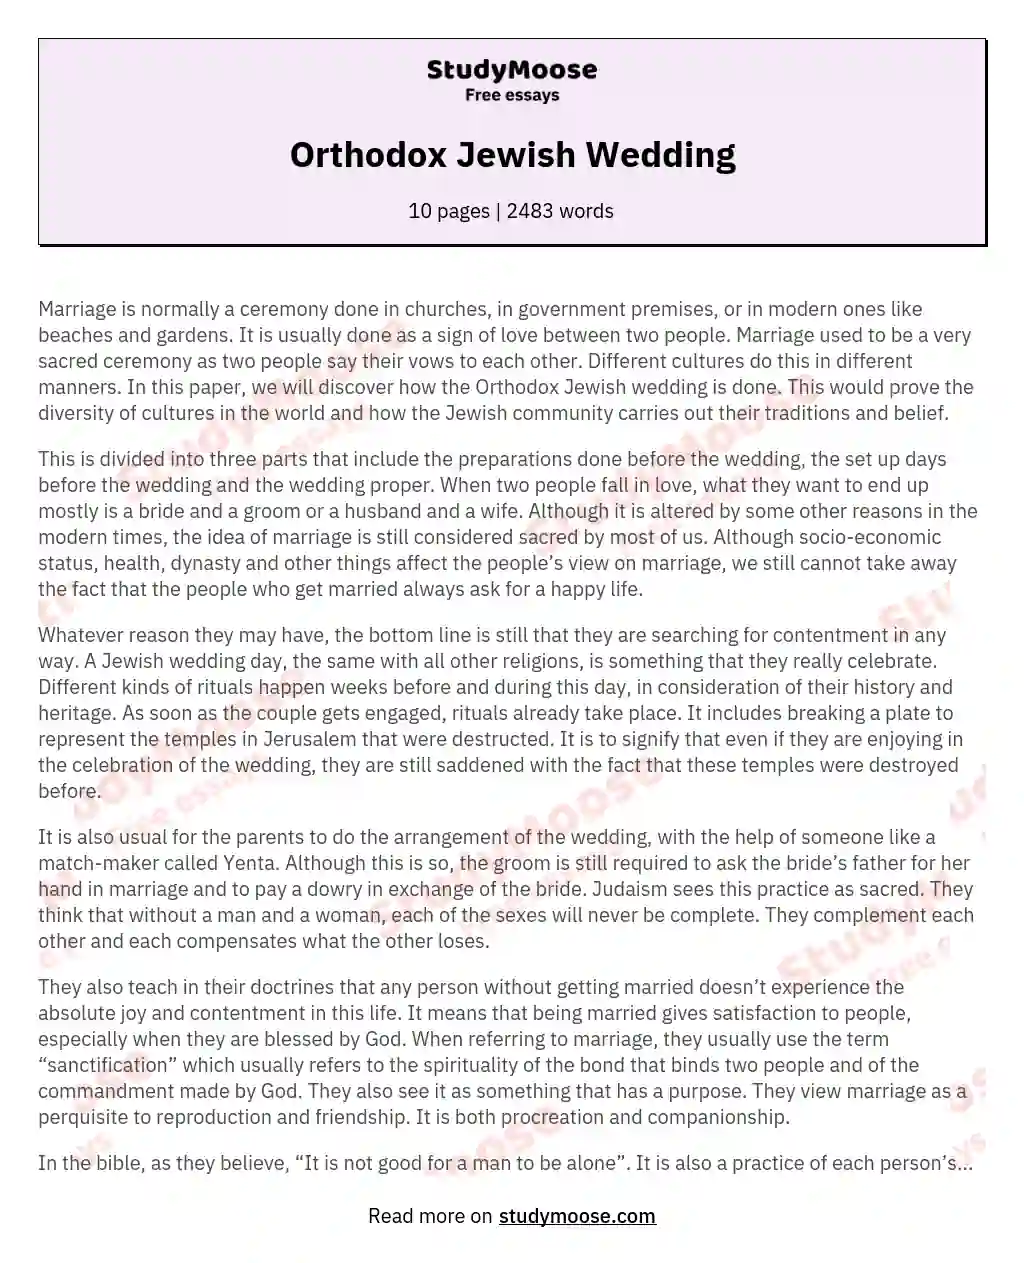 Orthodox Jewish Wedding essay